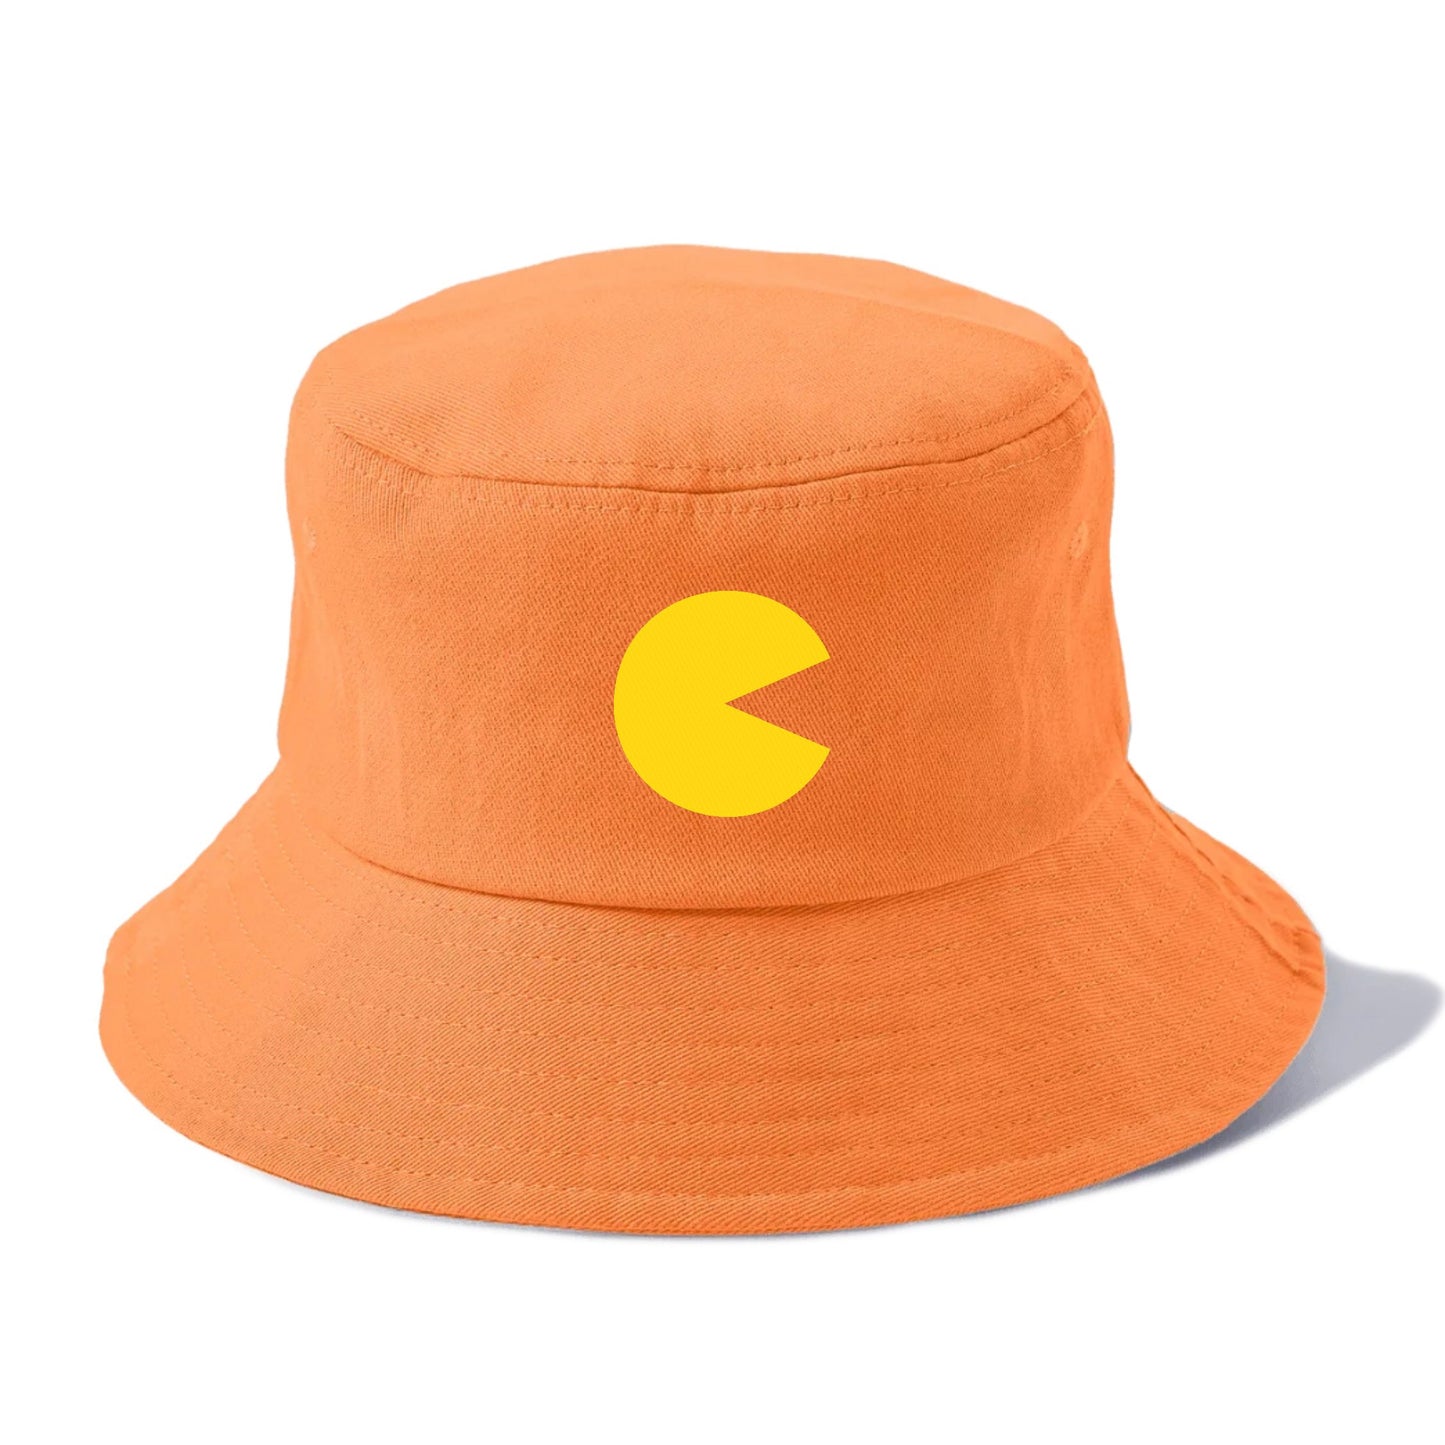 Retro 80s Pacman Hat